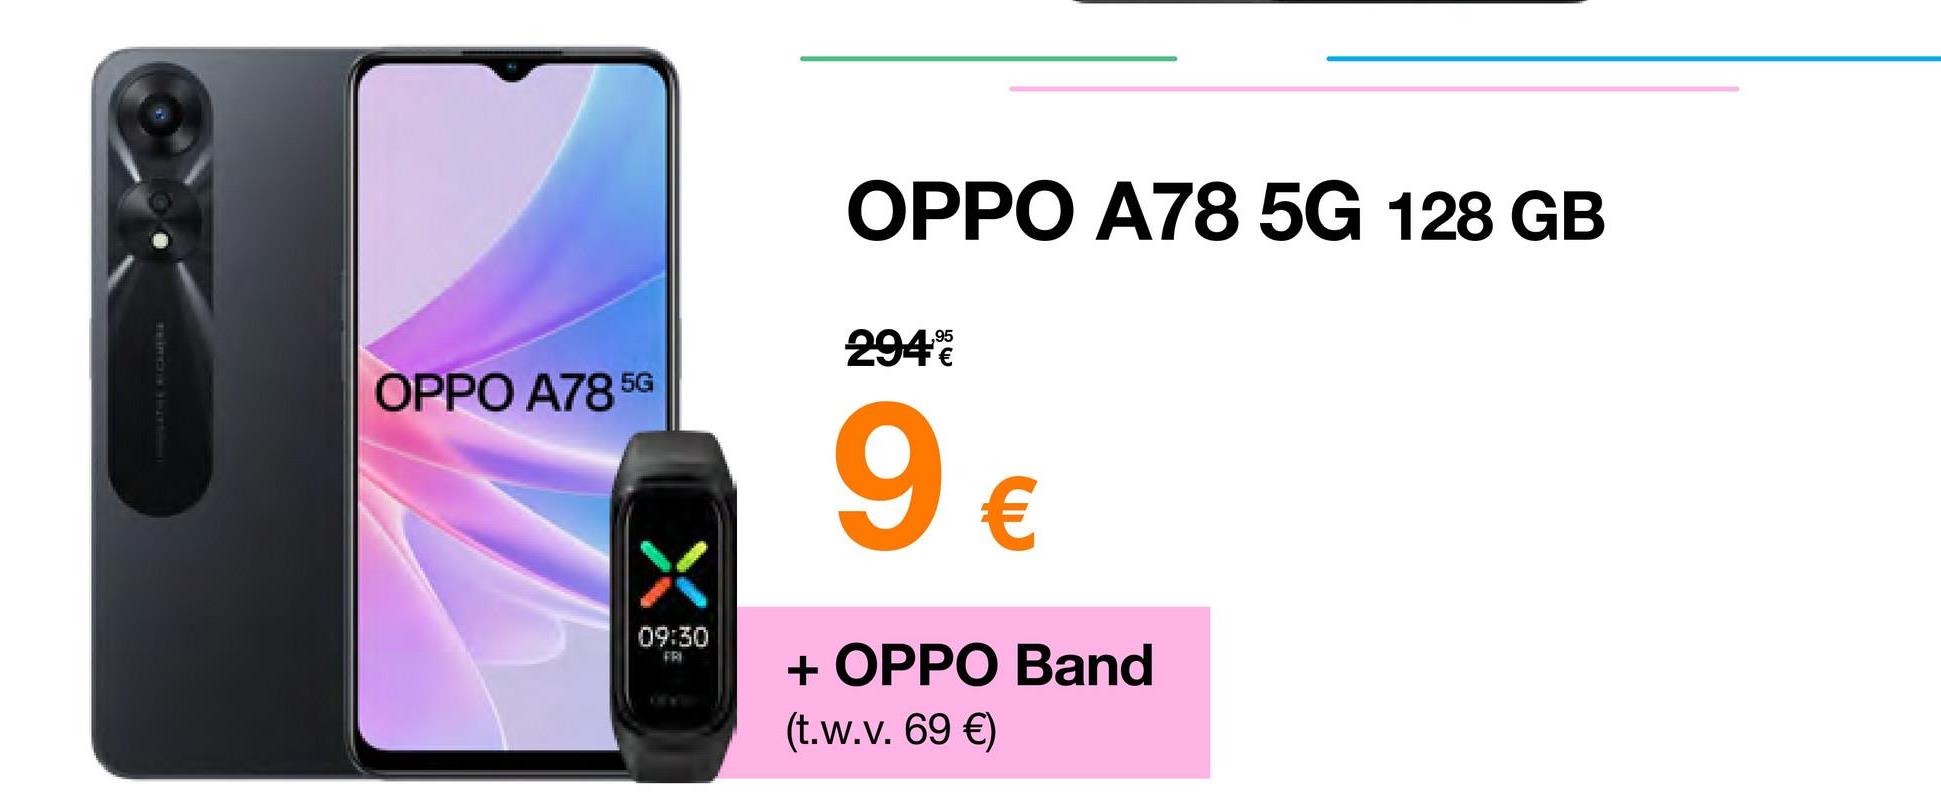 OPPO A78 5G
09:30
FRI
OPPO A78 5G 128 GB
294€
9€
+ OPPO Band
(t.w.v. 69 €)